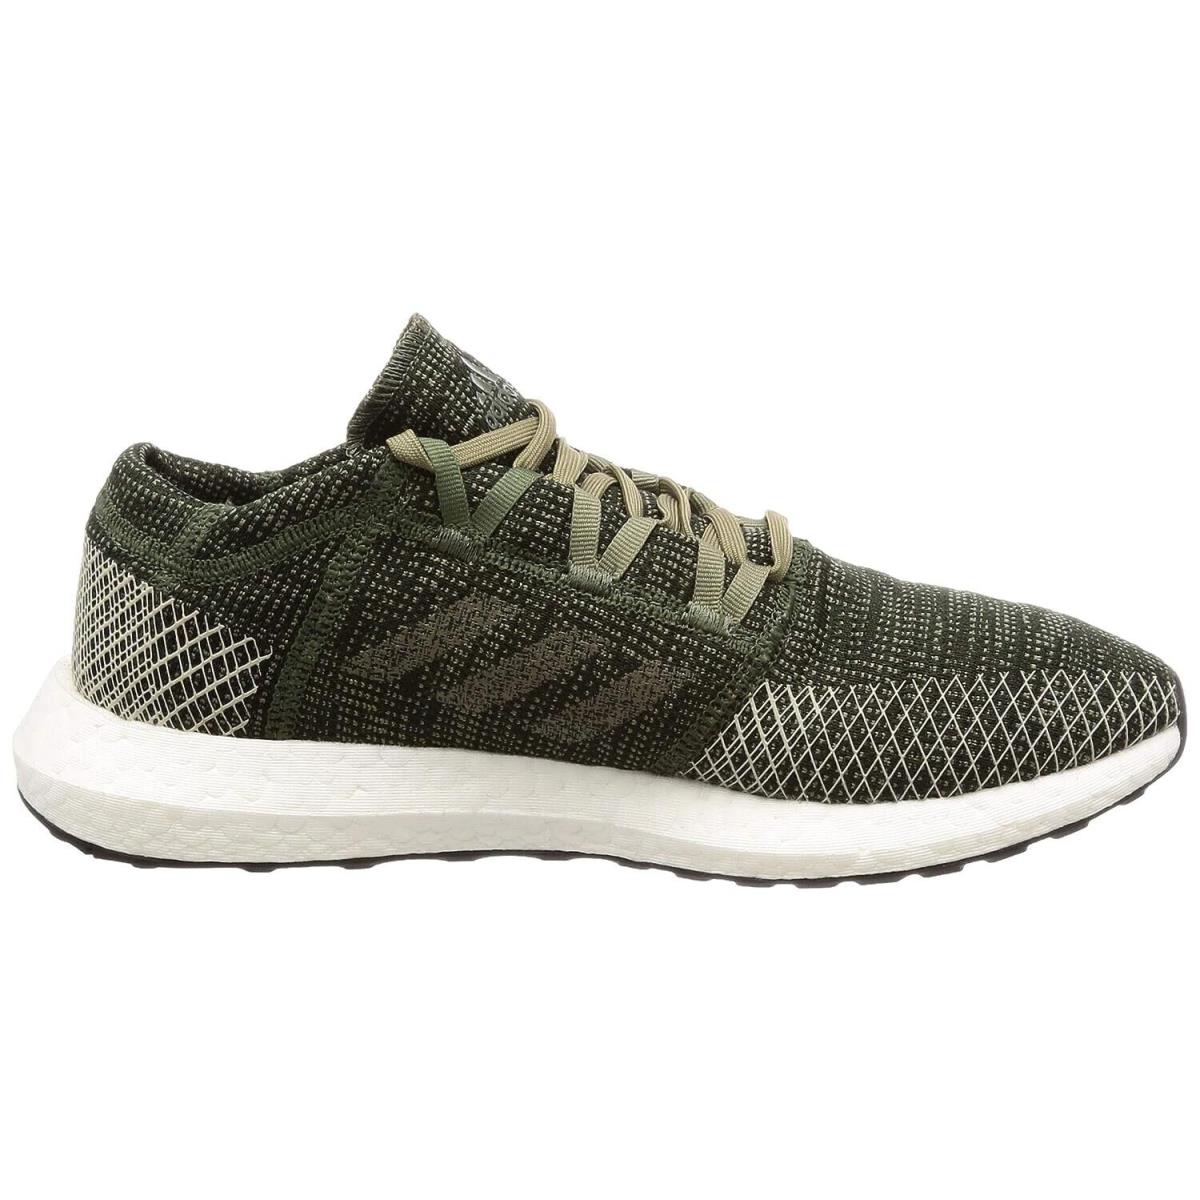 Adidas Mens Pureboost Go AH2325 Base Green Low Top Athletic Sneaker Shoes Sz 8.5 - Green